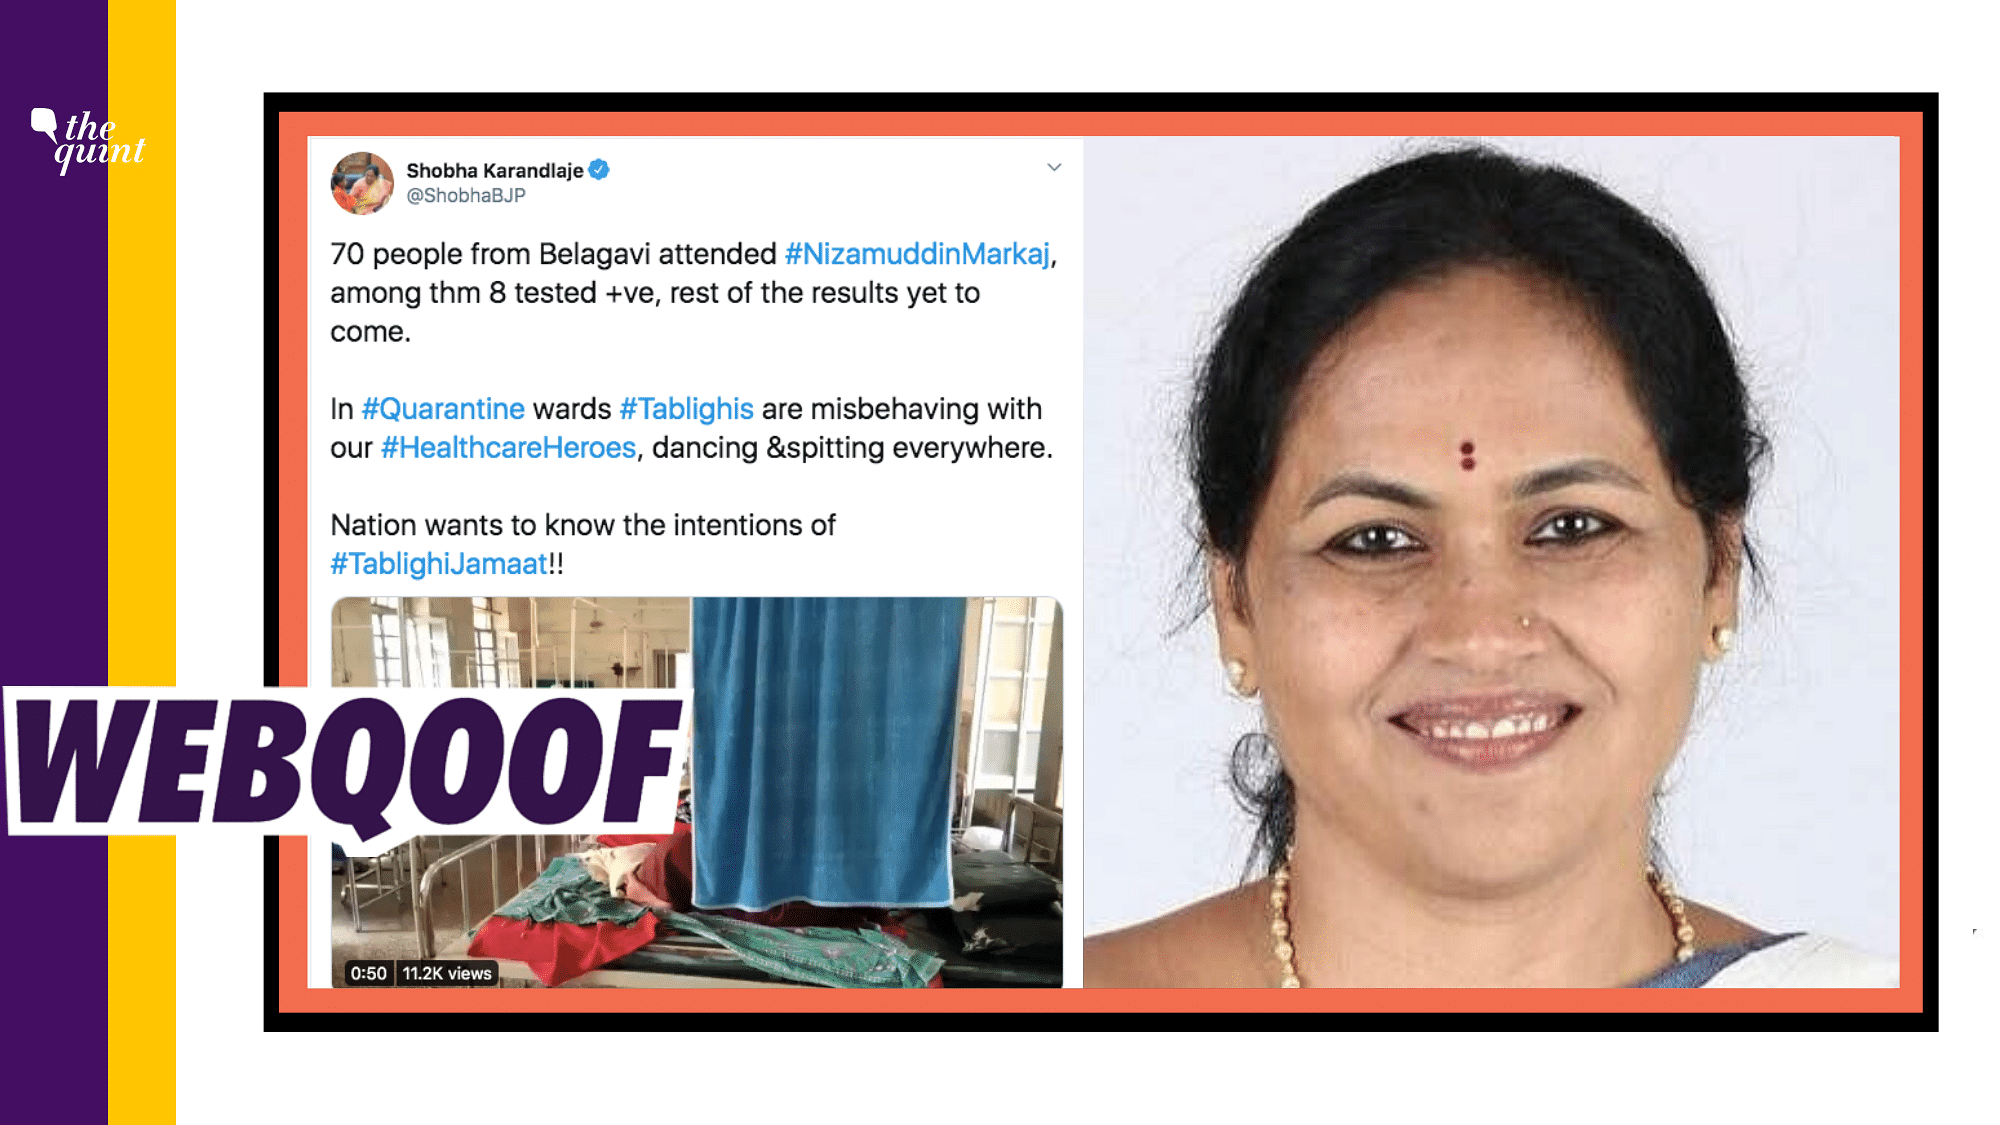 Karnataka MP Shobha Karandlaje tweeted a video, claiming that COVID-19 positive Tablighis were misbehaving and spitting everywhere in their hospital wards.&nbsp;